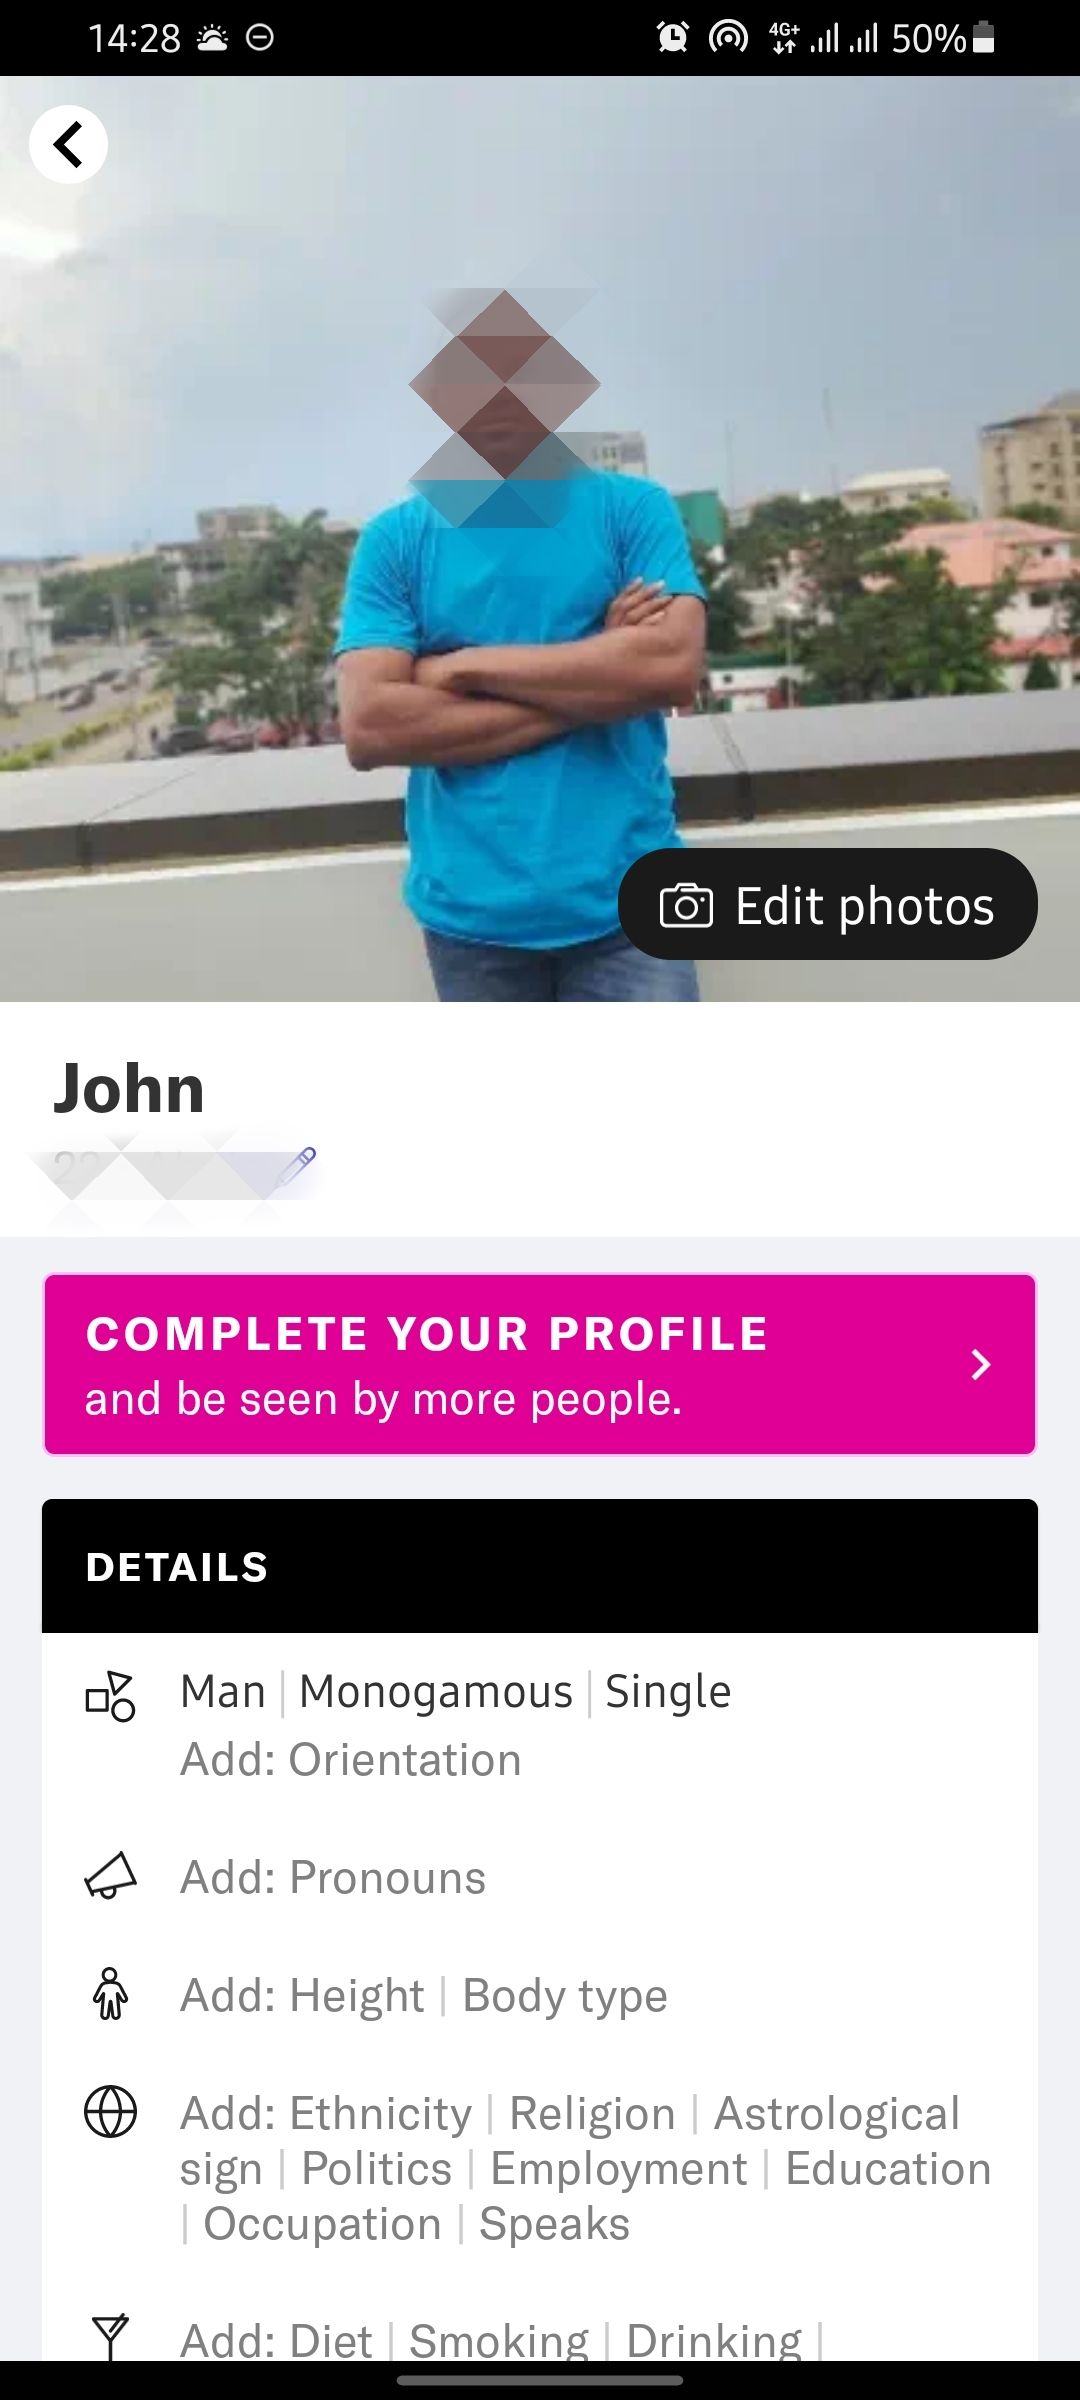 Screenshot of the edit profile page on OkCupid